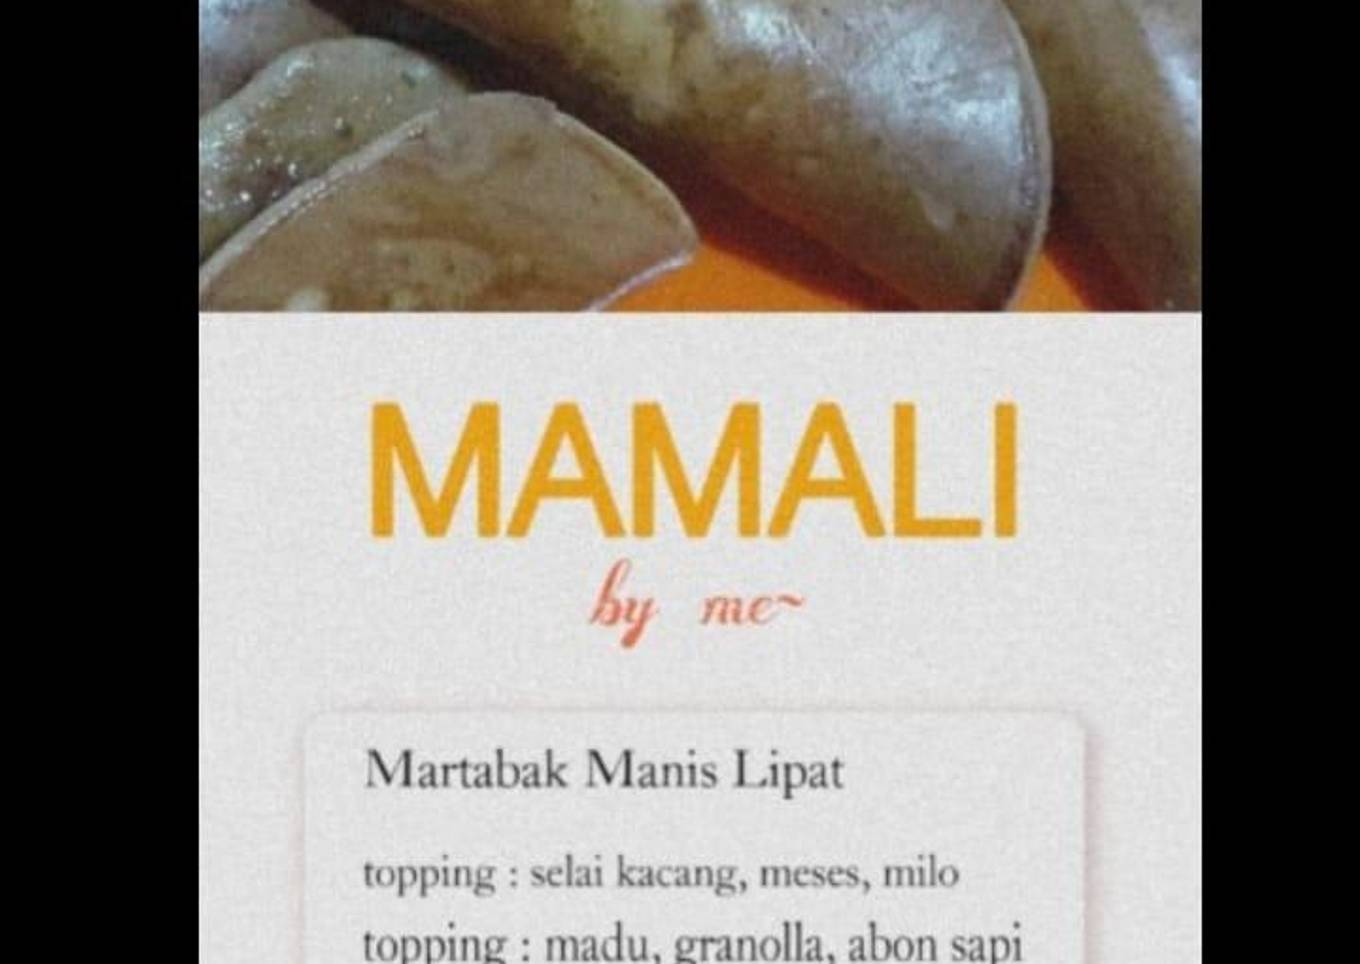 Mamali Kulit Cokelat (Martabak Manis Lipat) - resep kuliner nusantara